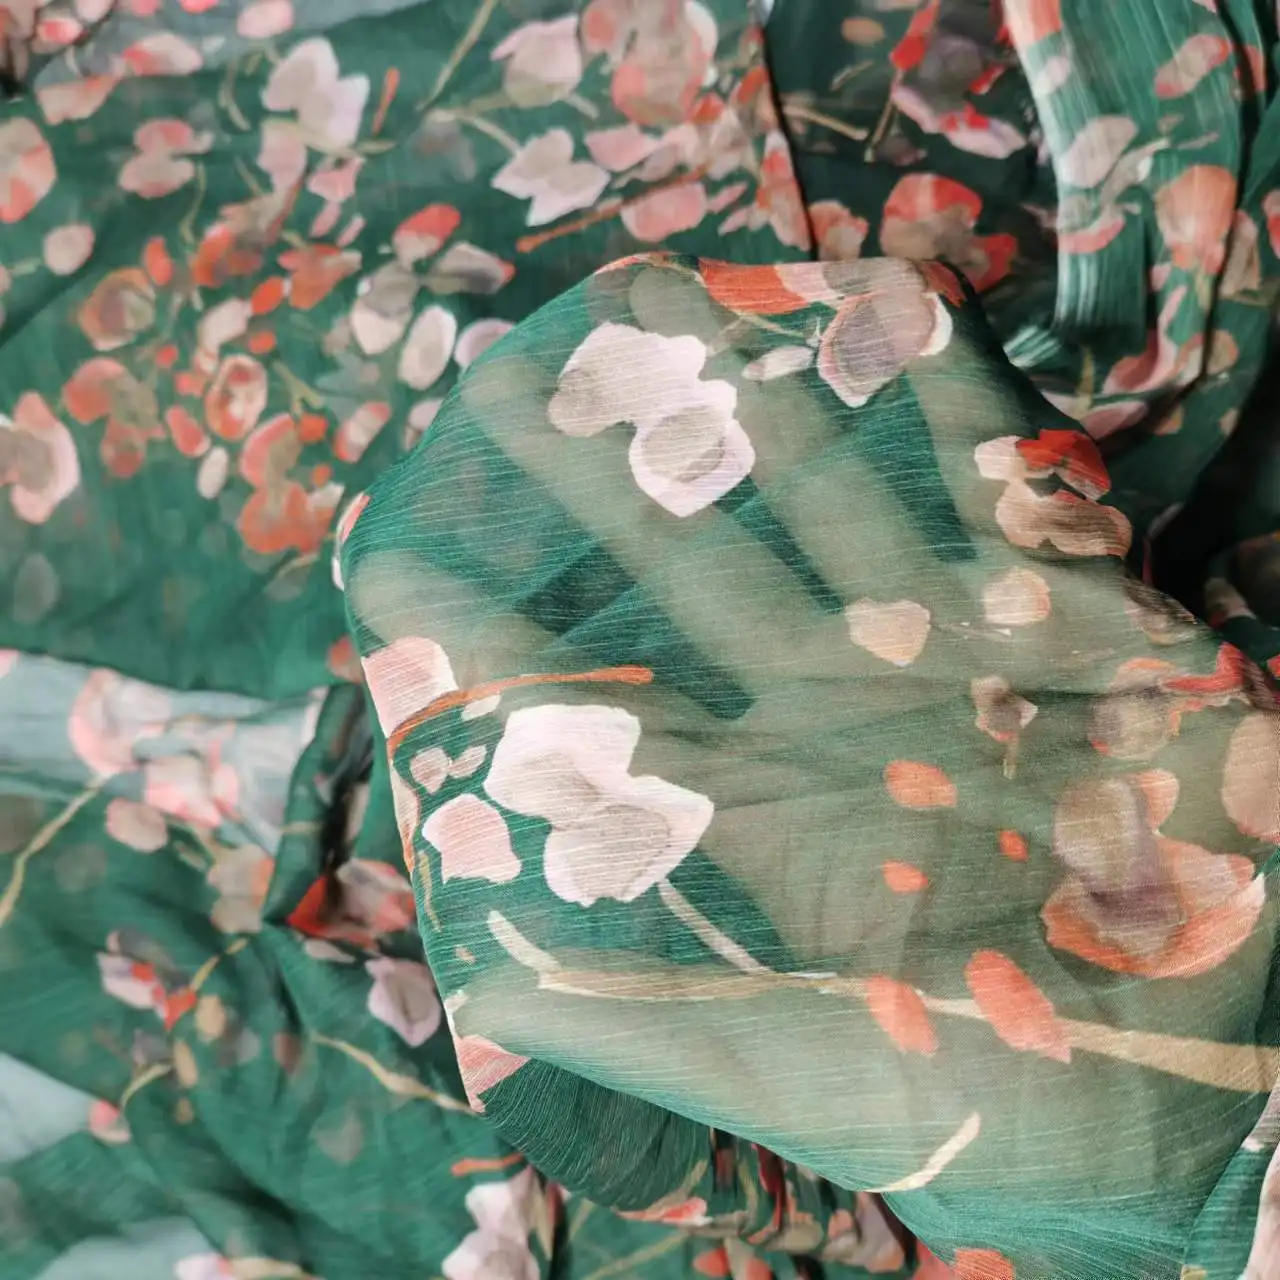 Elegant Soft Microtransparent Flower Printing Chiffon Fabric For Silk Scarves Women Summer Sheer Dress Skirt Mesh Veil images - 6